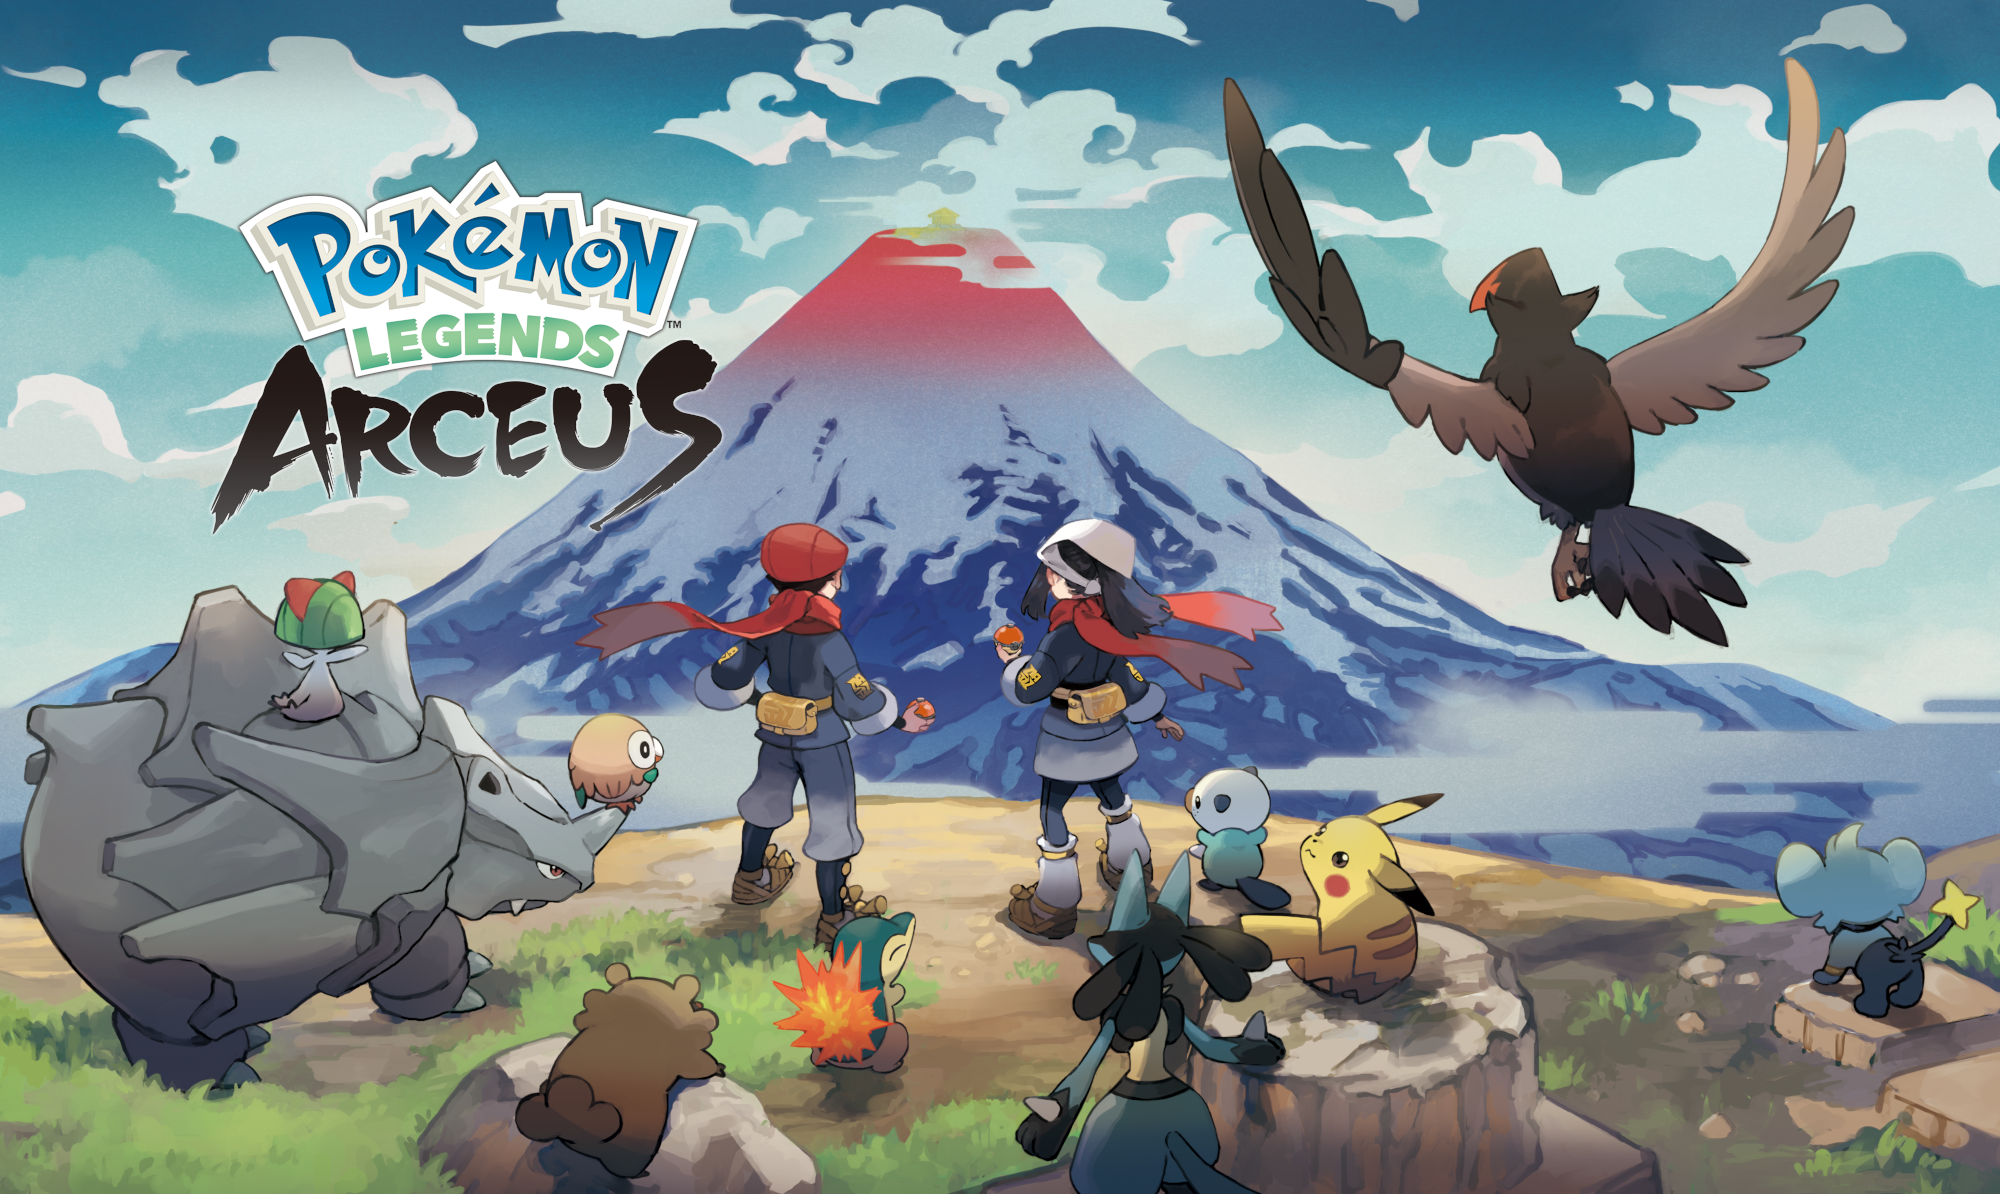 All Pokémon in Pokémon Legends Arceus & Full Hisuian Pokédex